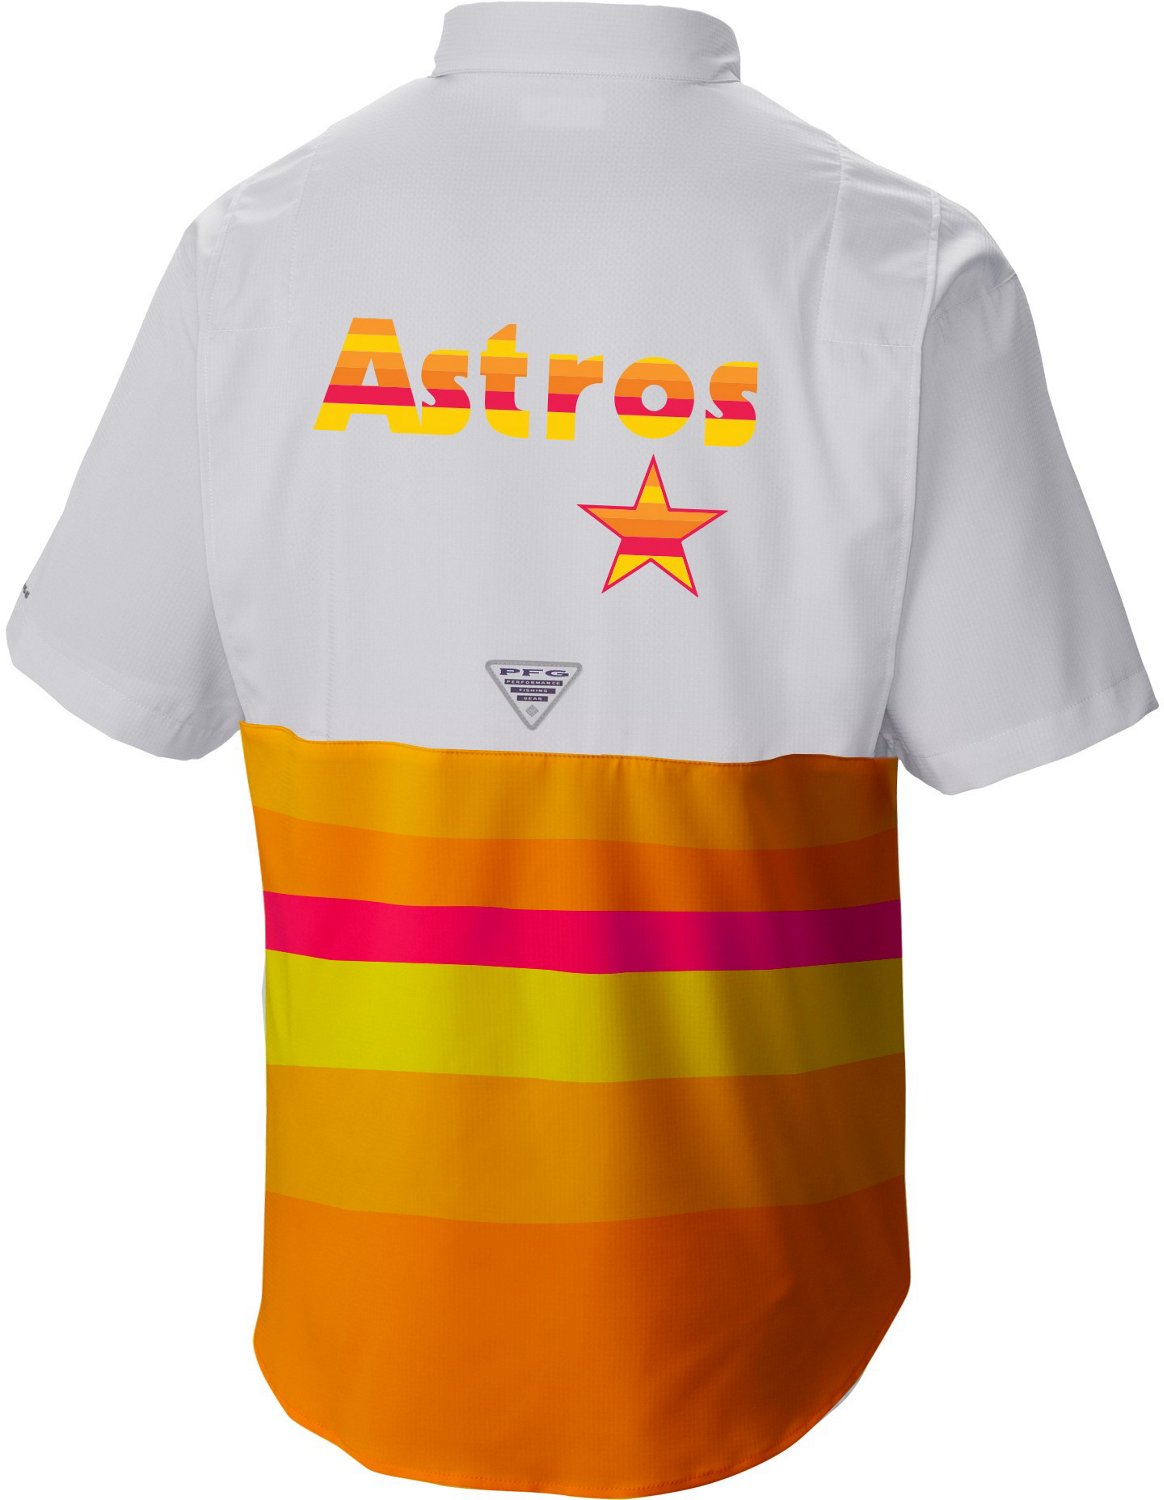 astros columbia pfg shirt